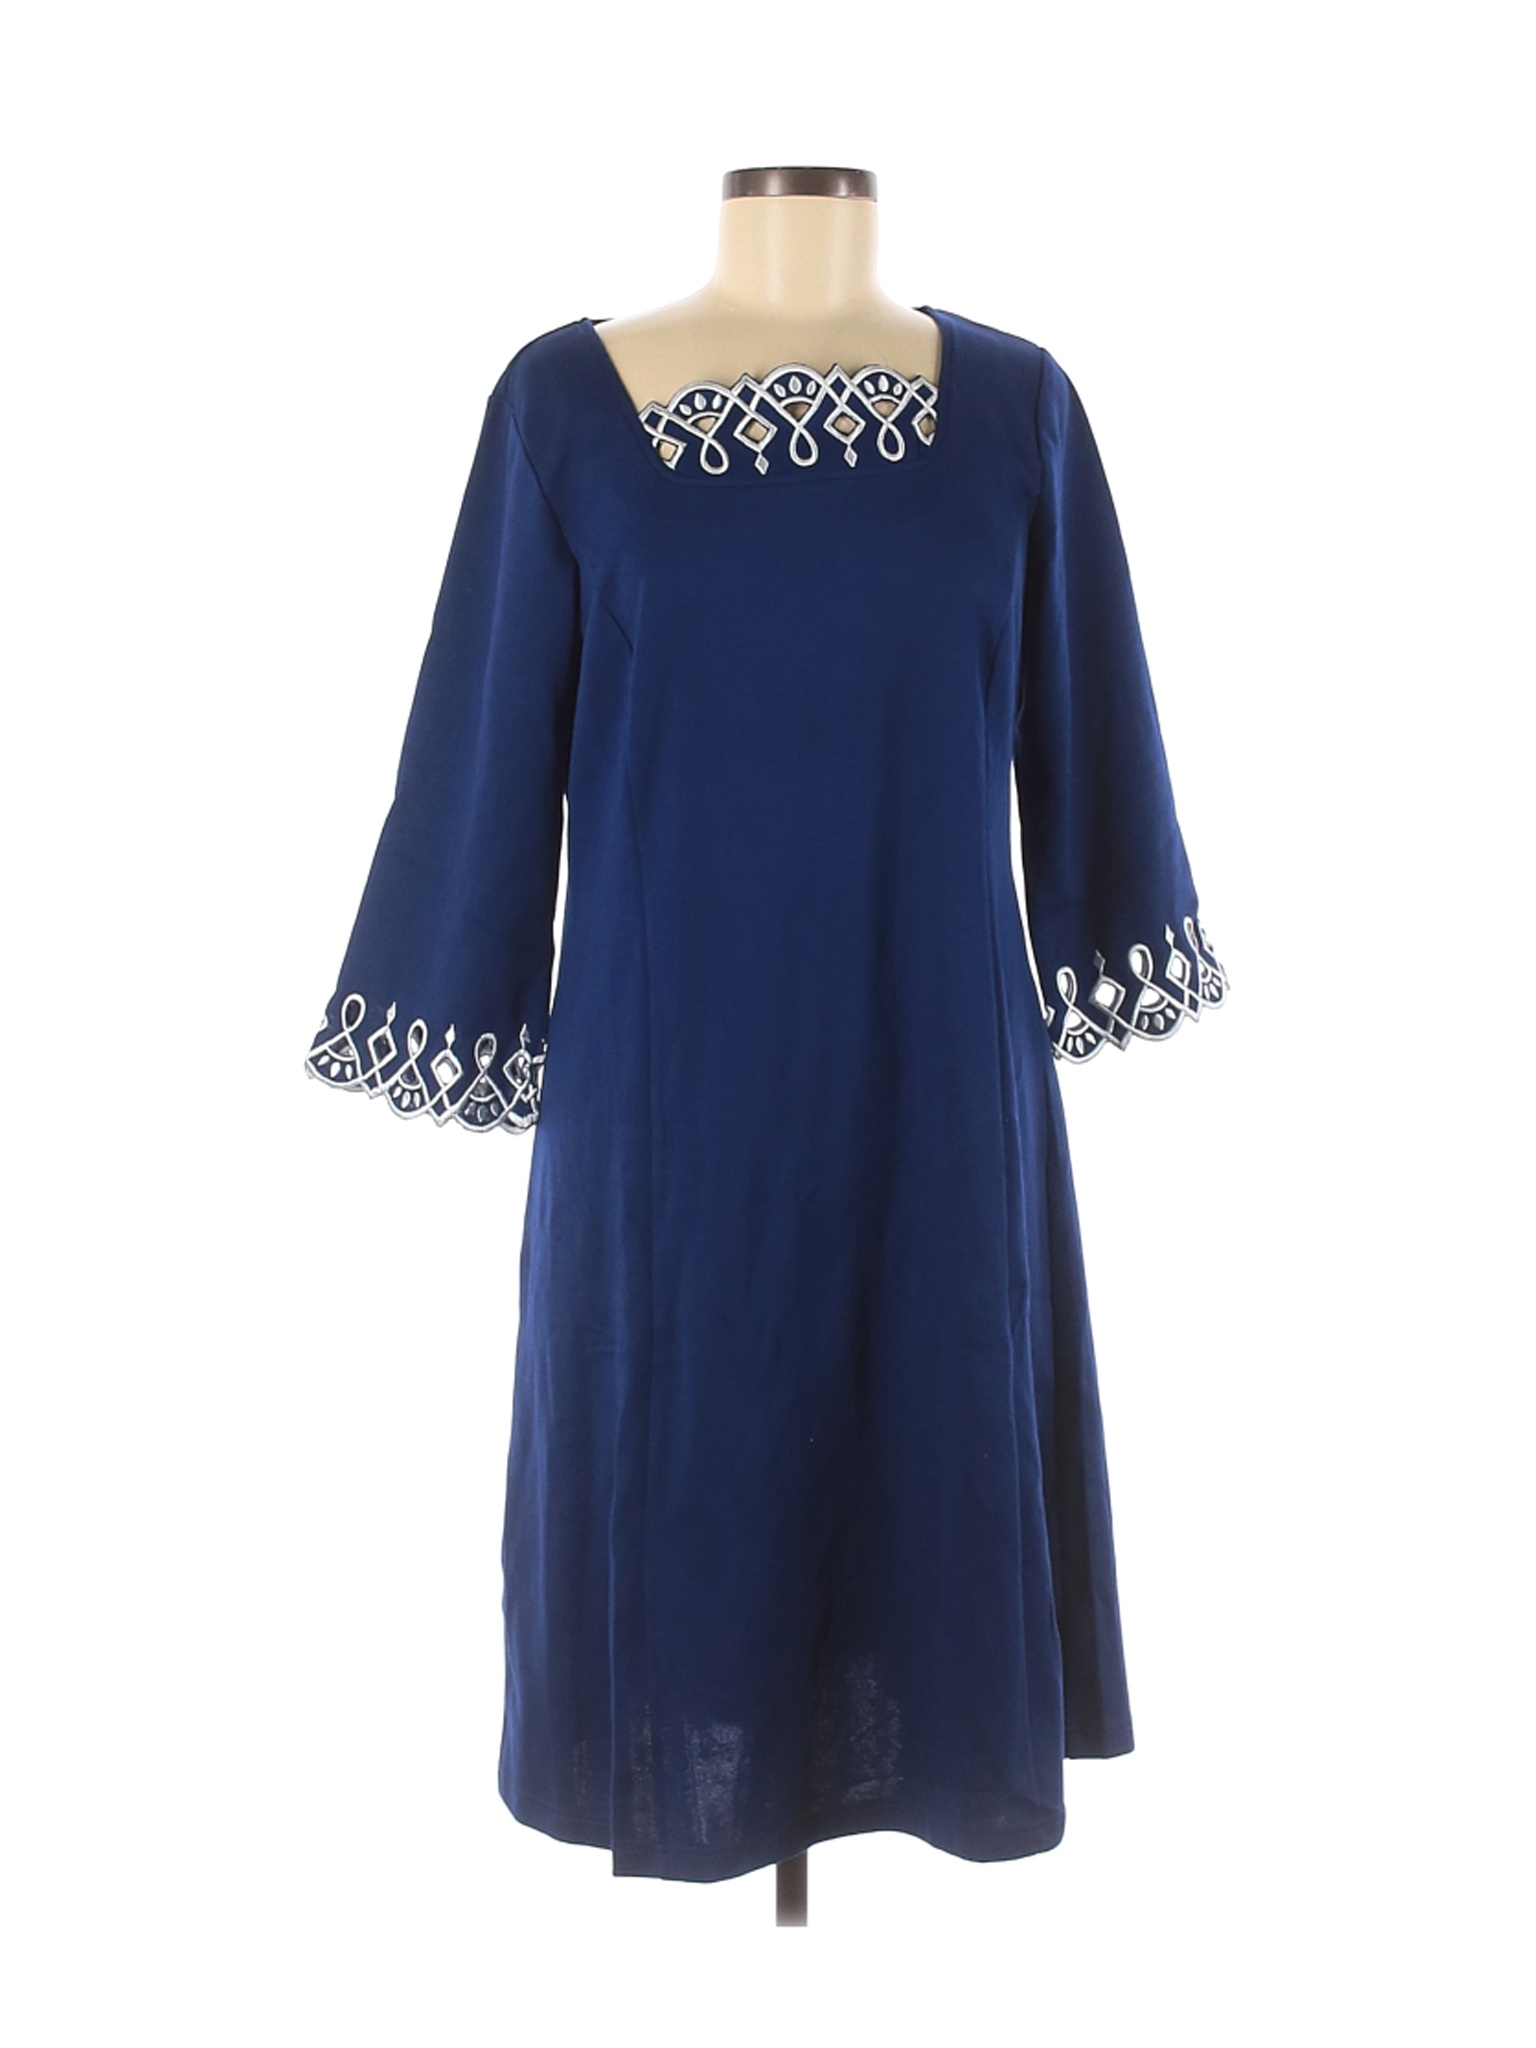 NWT Bob Mackie Women Blue Casual Dress M | eBay